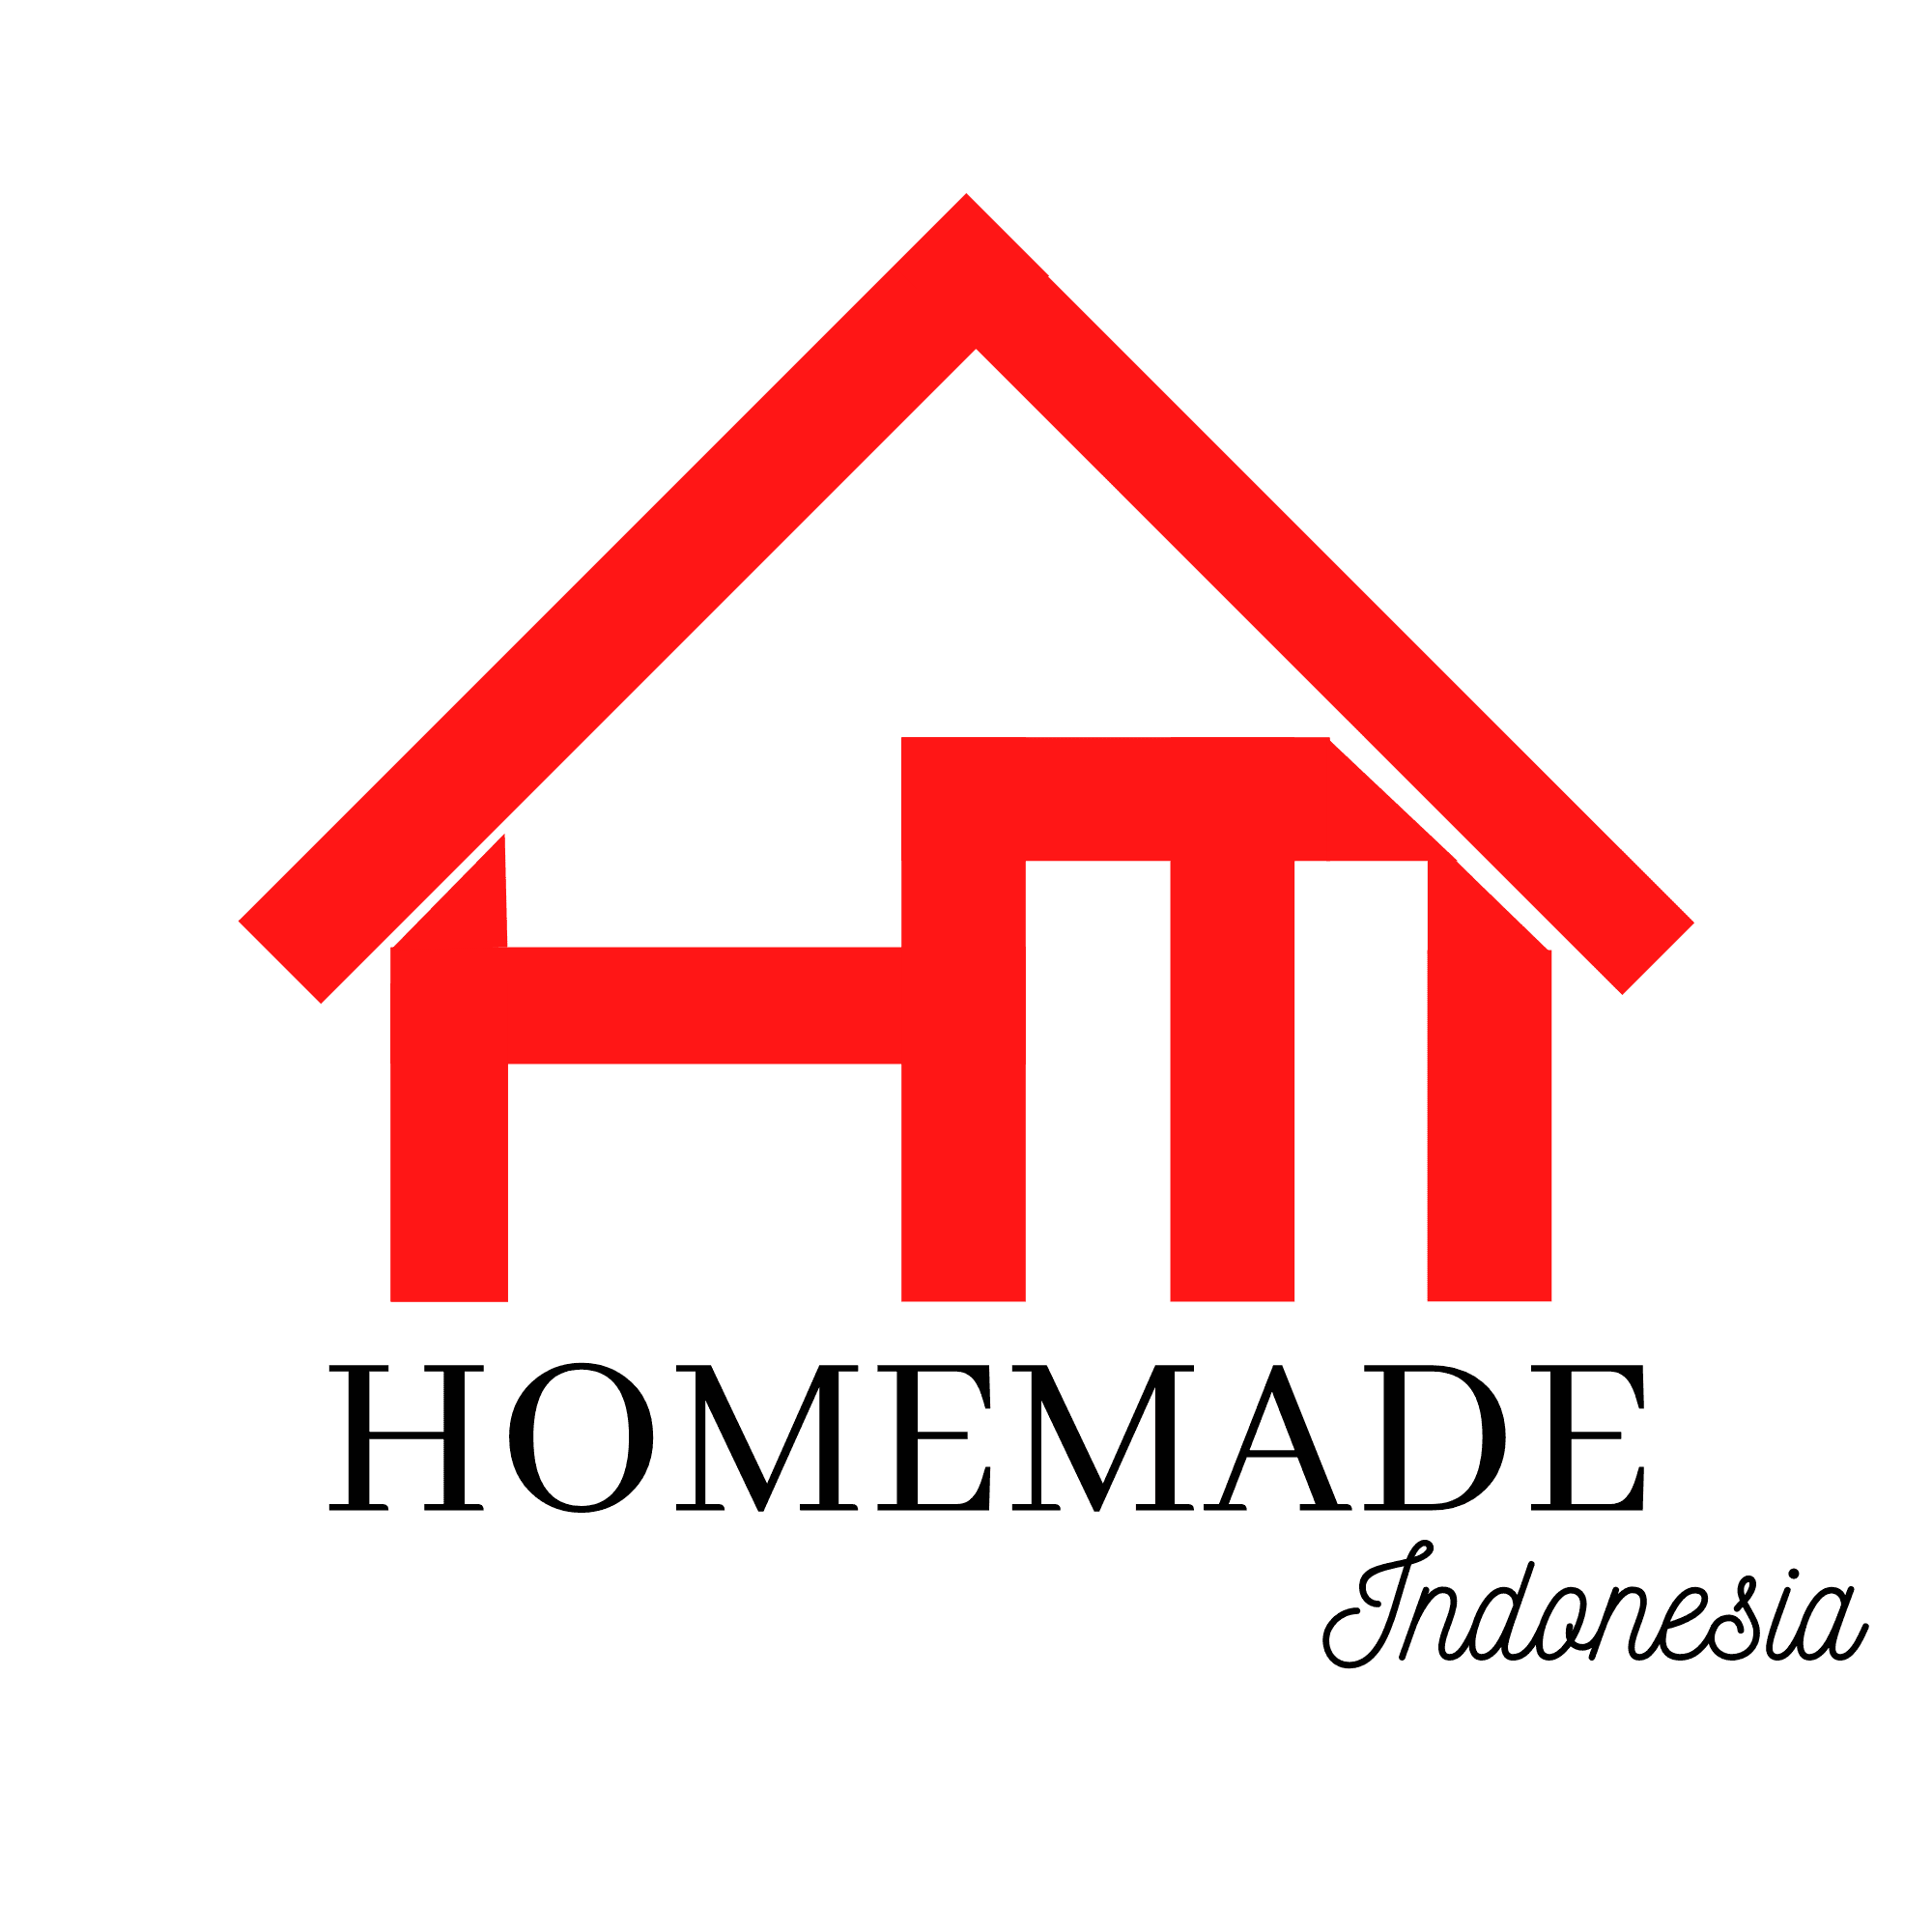 Homemade Indonesia / CV Sumatera Indah Production